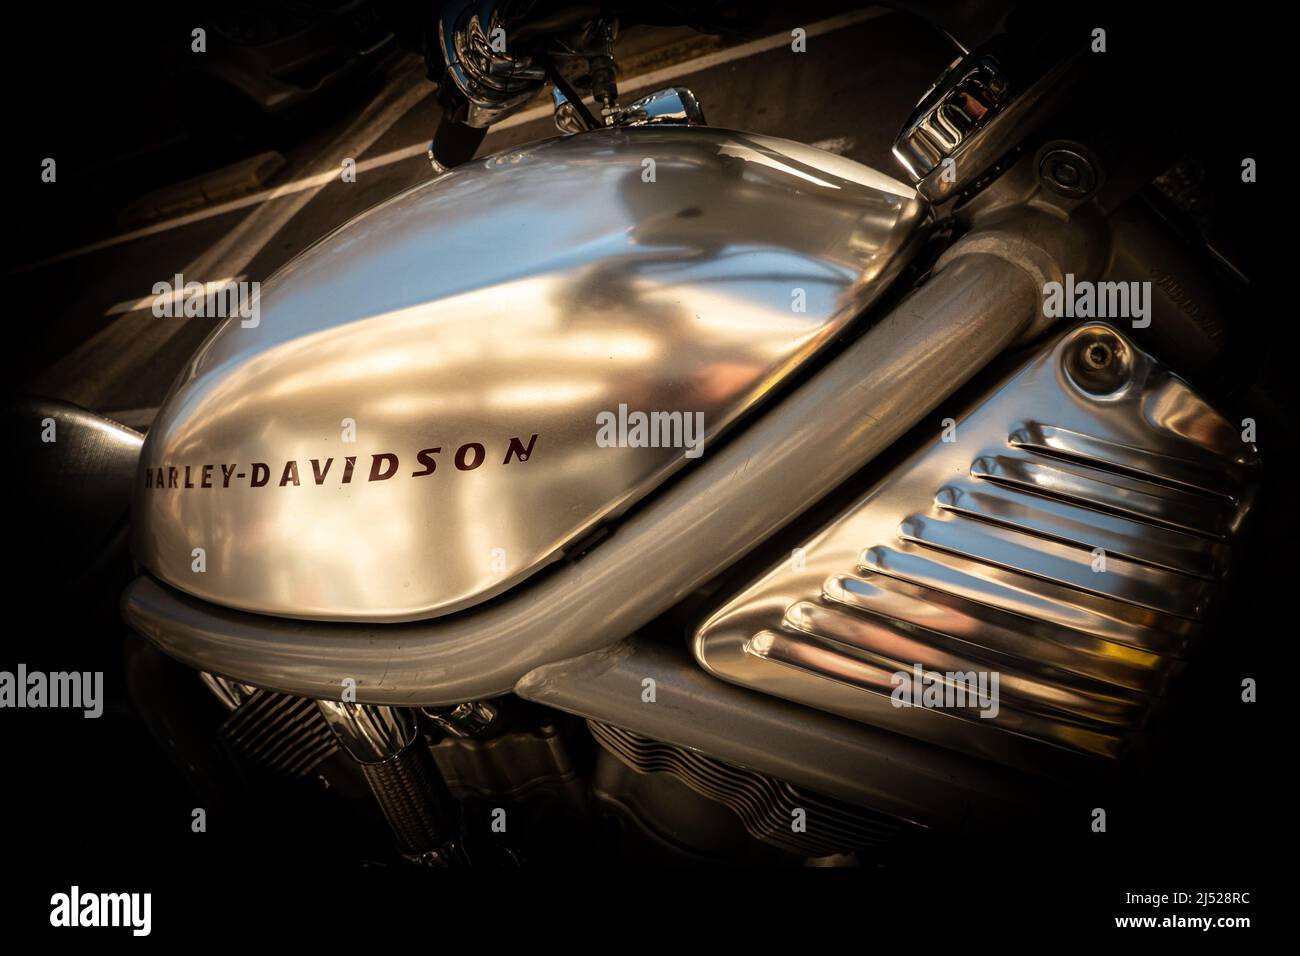 Detalles de Harley davidson Foto de stock